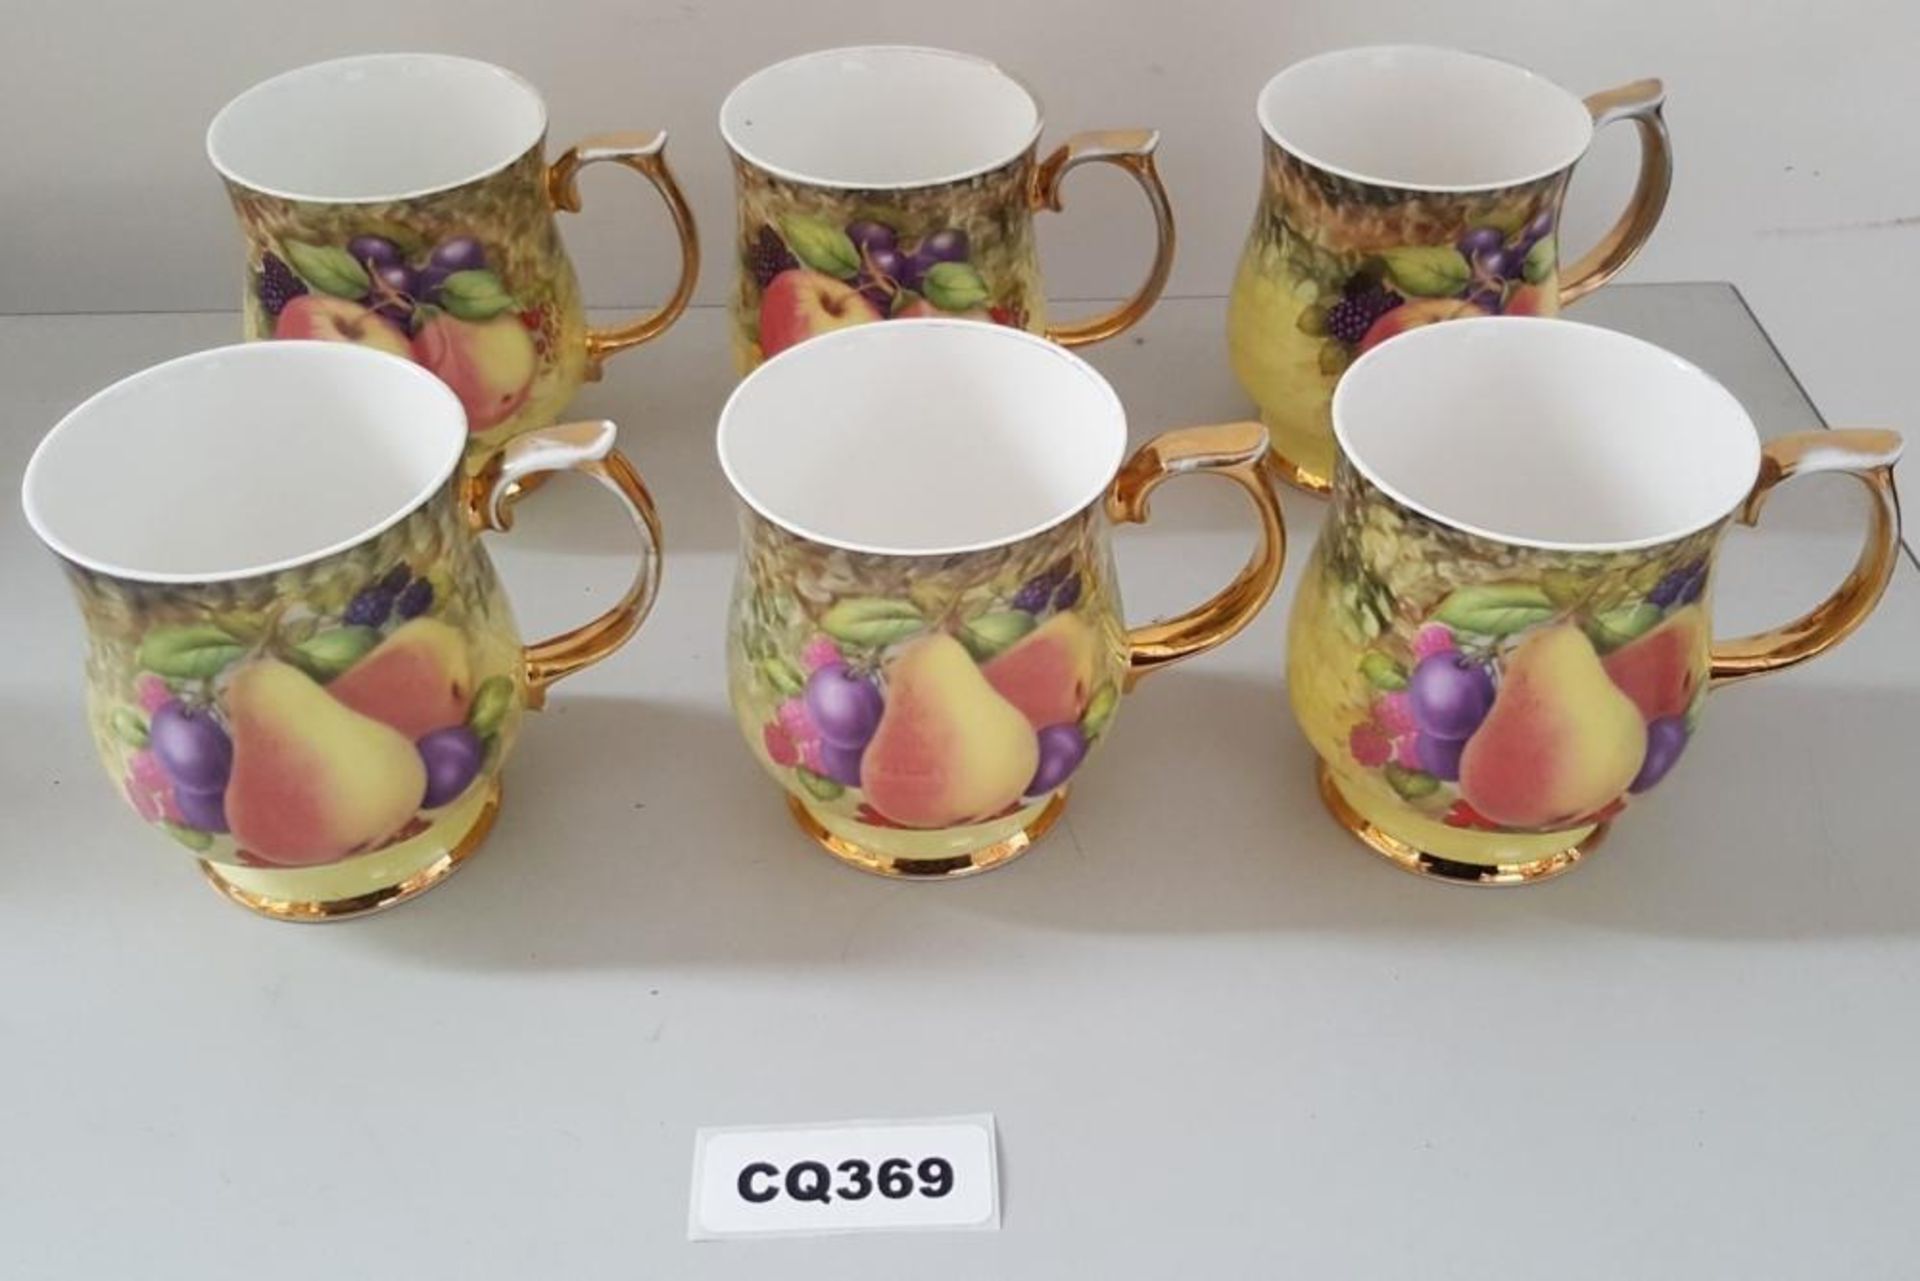 6 x Set Of Baron China Staffs LTD Mugs With Fruit Design - Ref CQ369 E - CL334 - Location: Altrincha